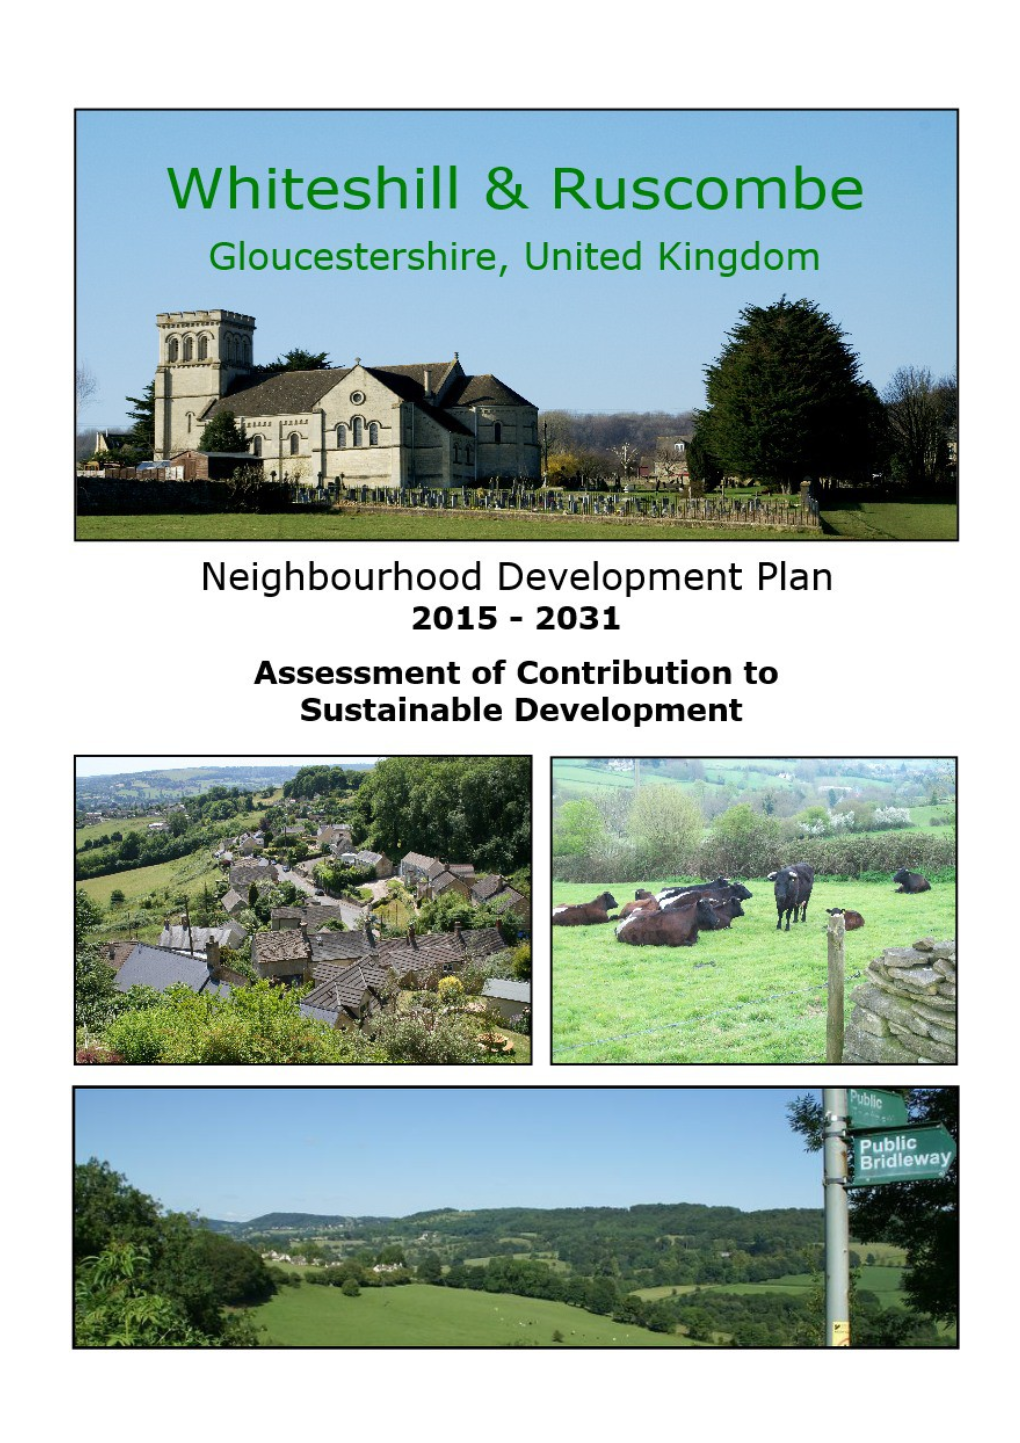 Assessment of the Contribution of the Whiteshill & Ruscombe Neighbourhood Development